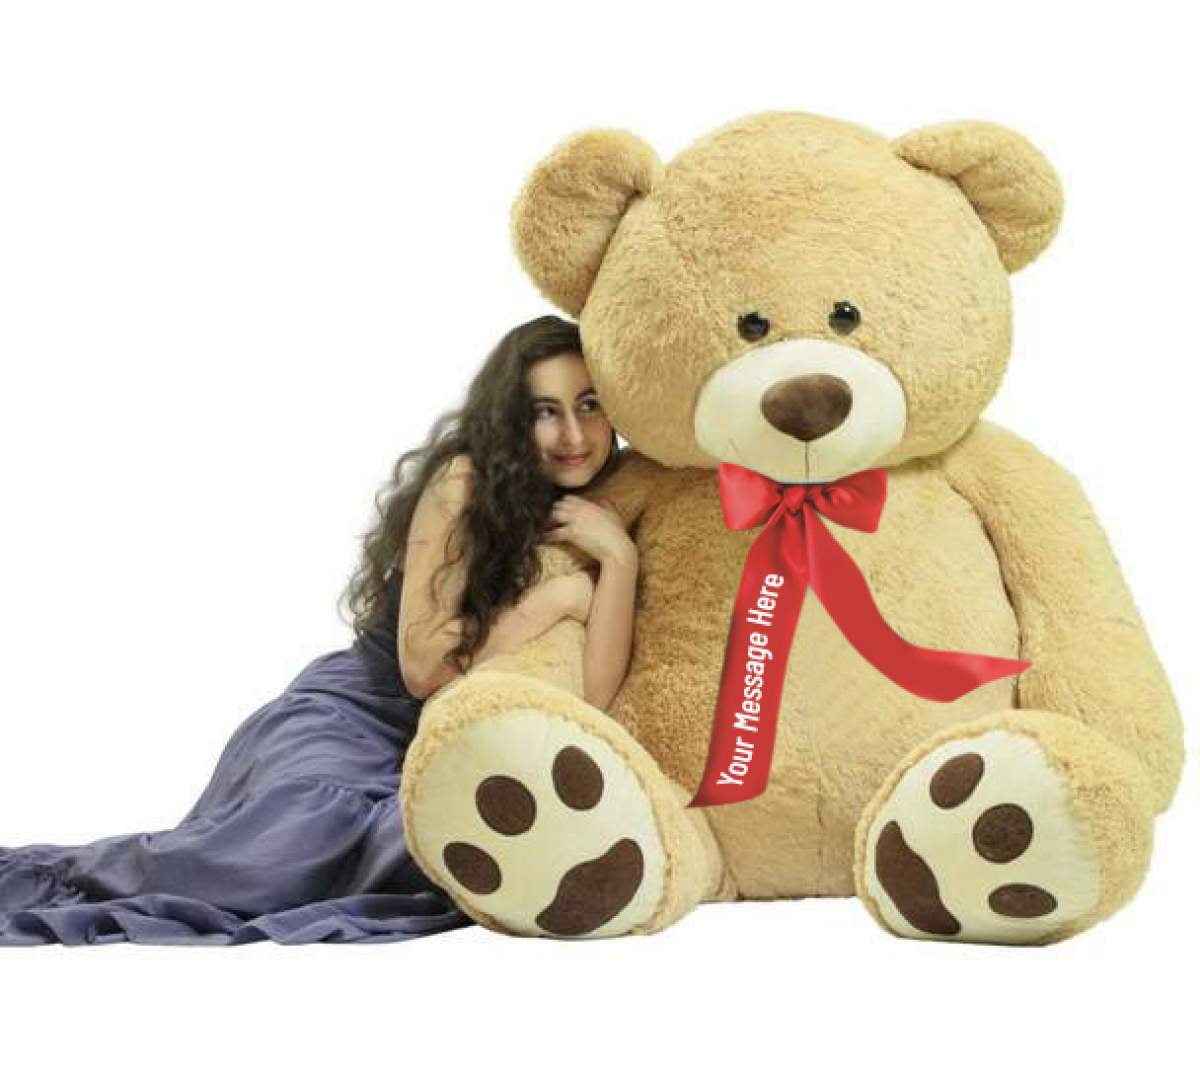 Giant Big Hung Teddy Bear Plush Baby Soft Toys Doll Stuffed Animal Birthday Gift 